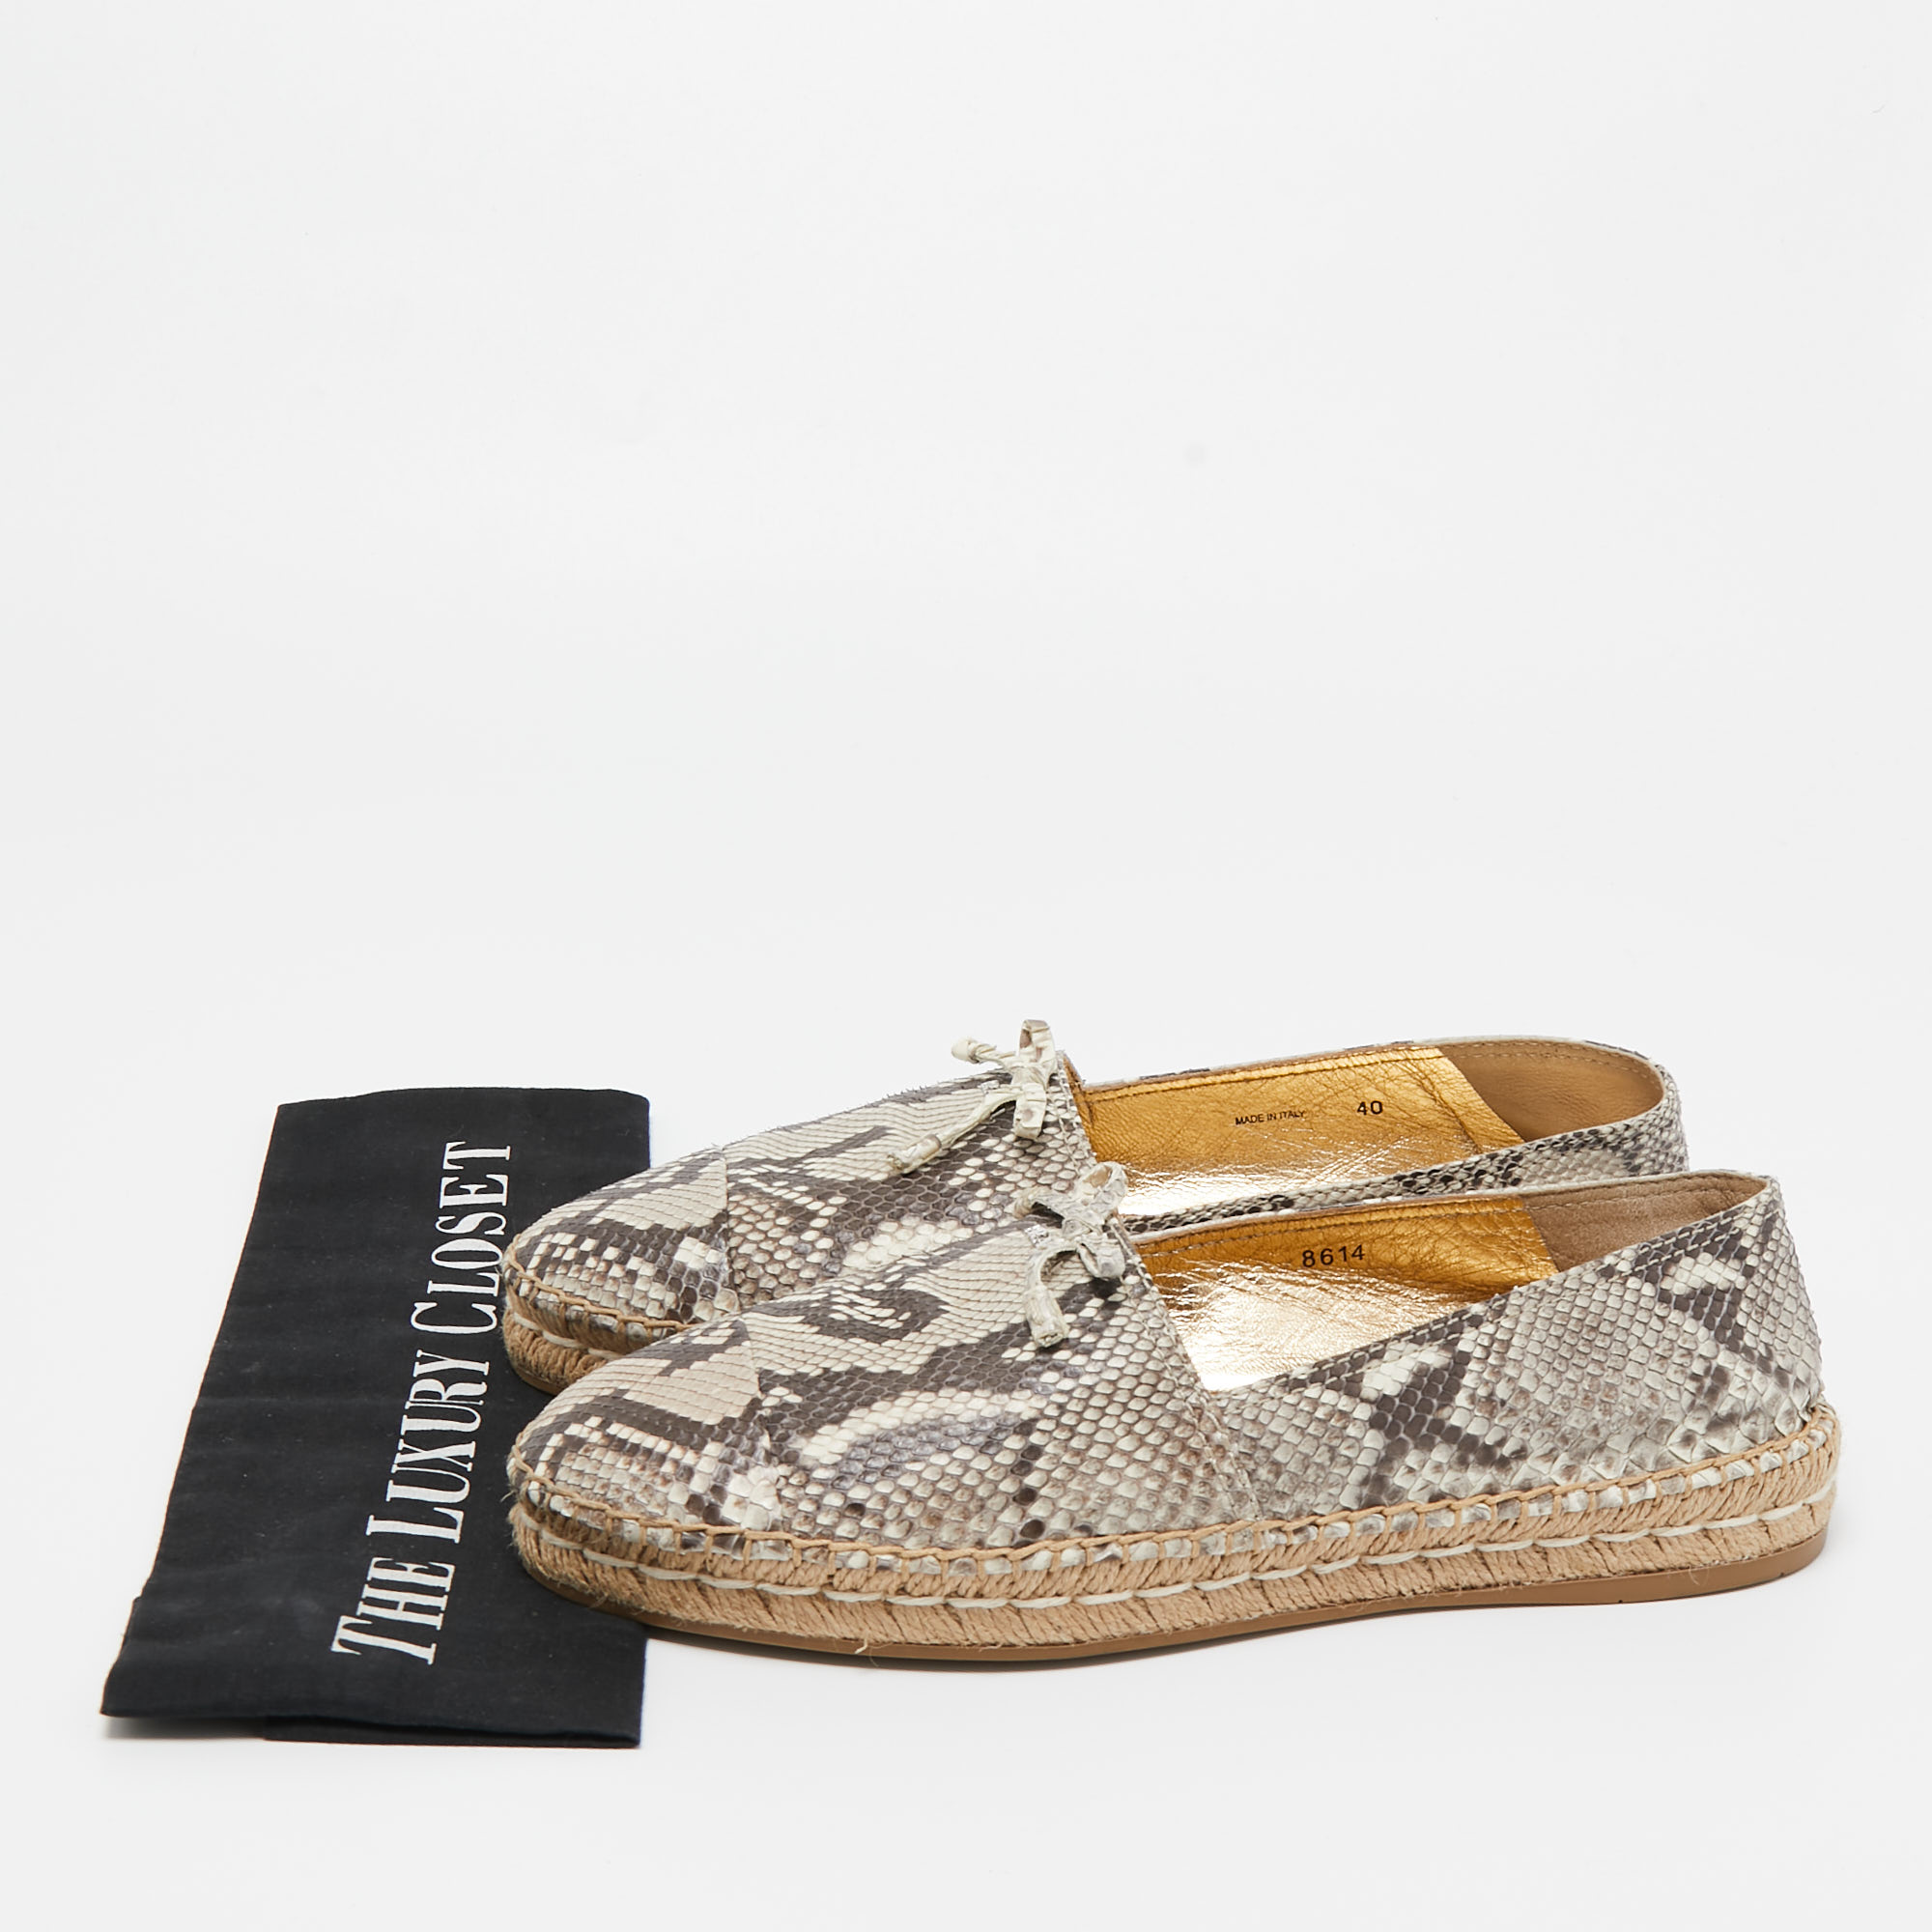 Prada Brown/Beige Python Leather Slip On Loafers Size 40